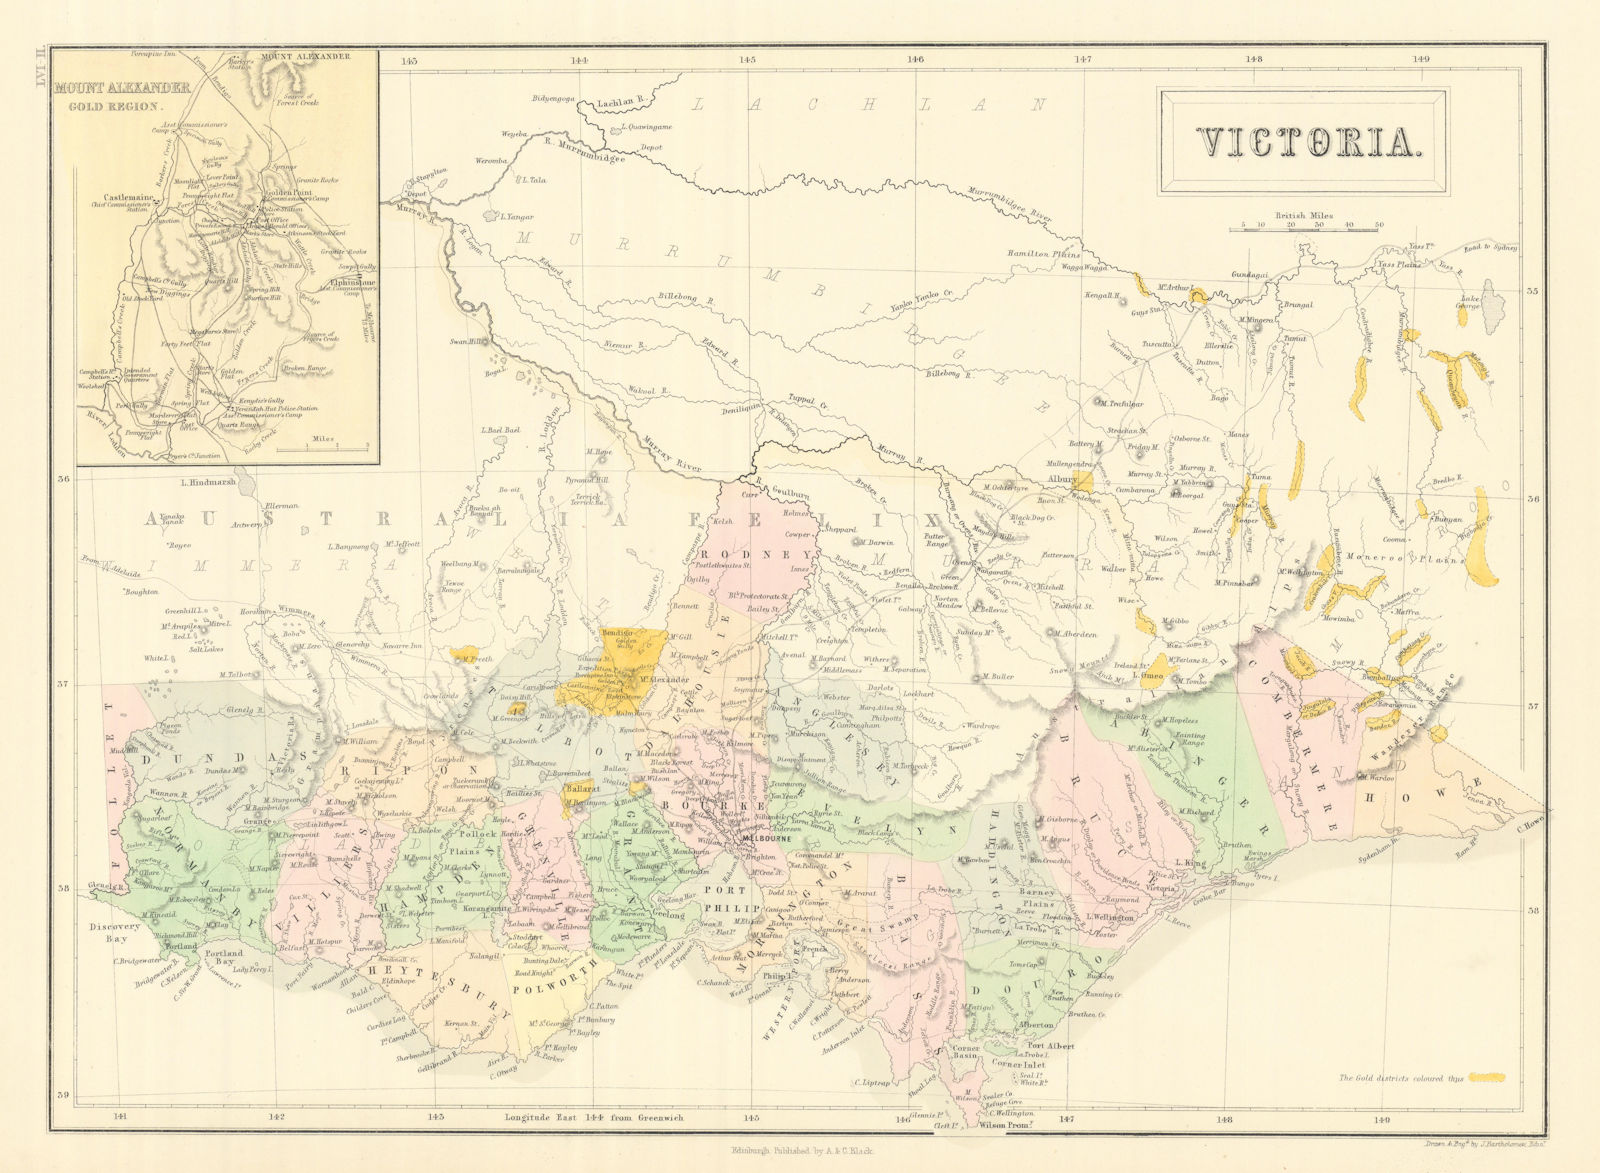 Victoria, Australia. Gold rush districts & Mount Alexander gold region 1854 map